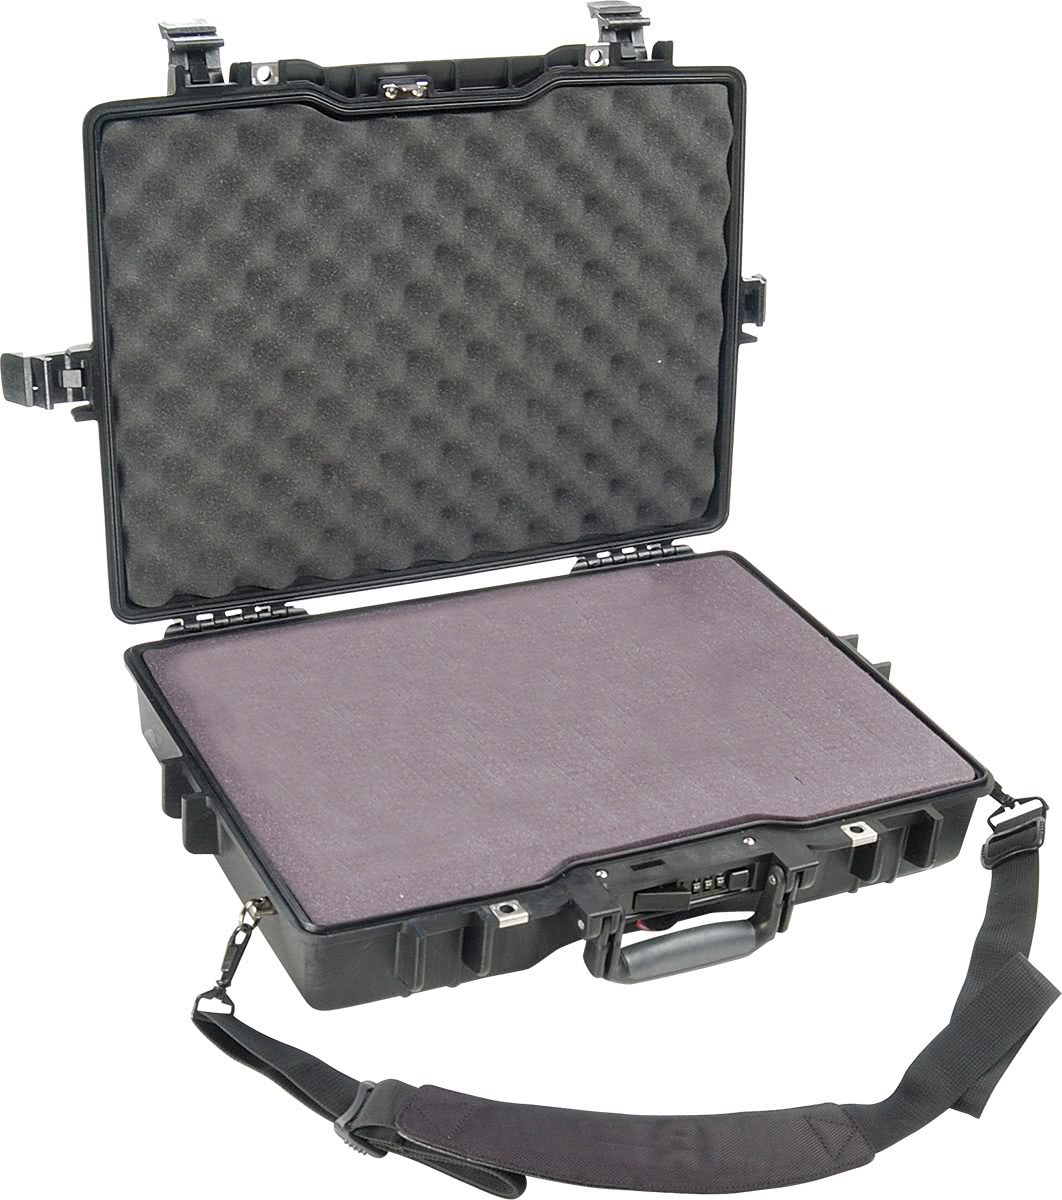 Pelican Products 1495 Laptop Case - Black, Foam